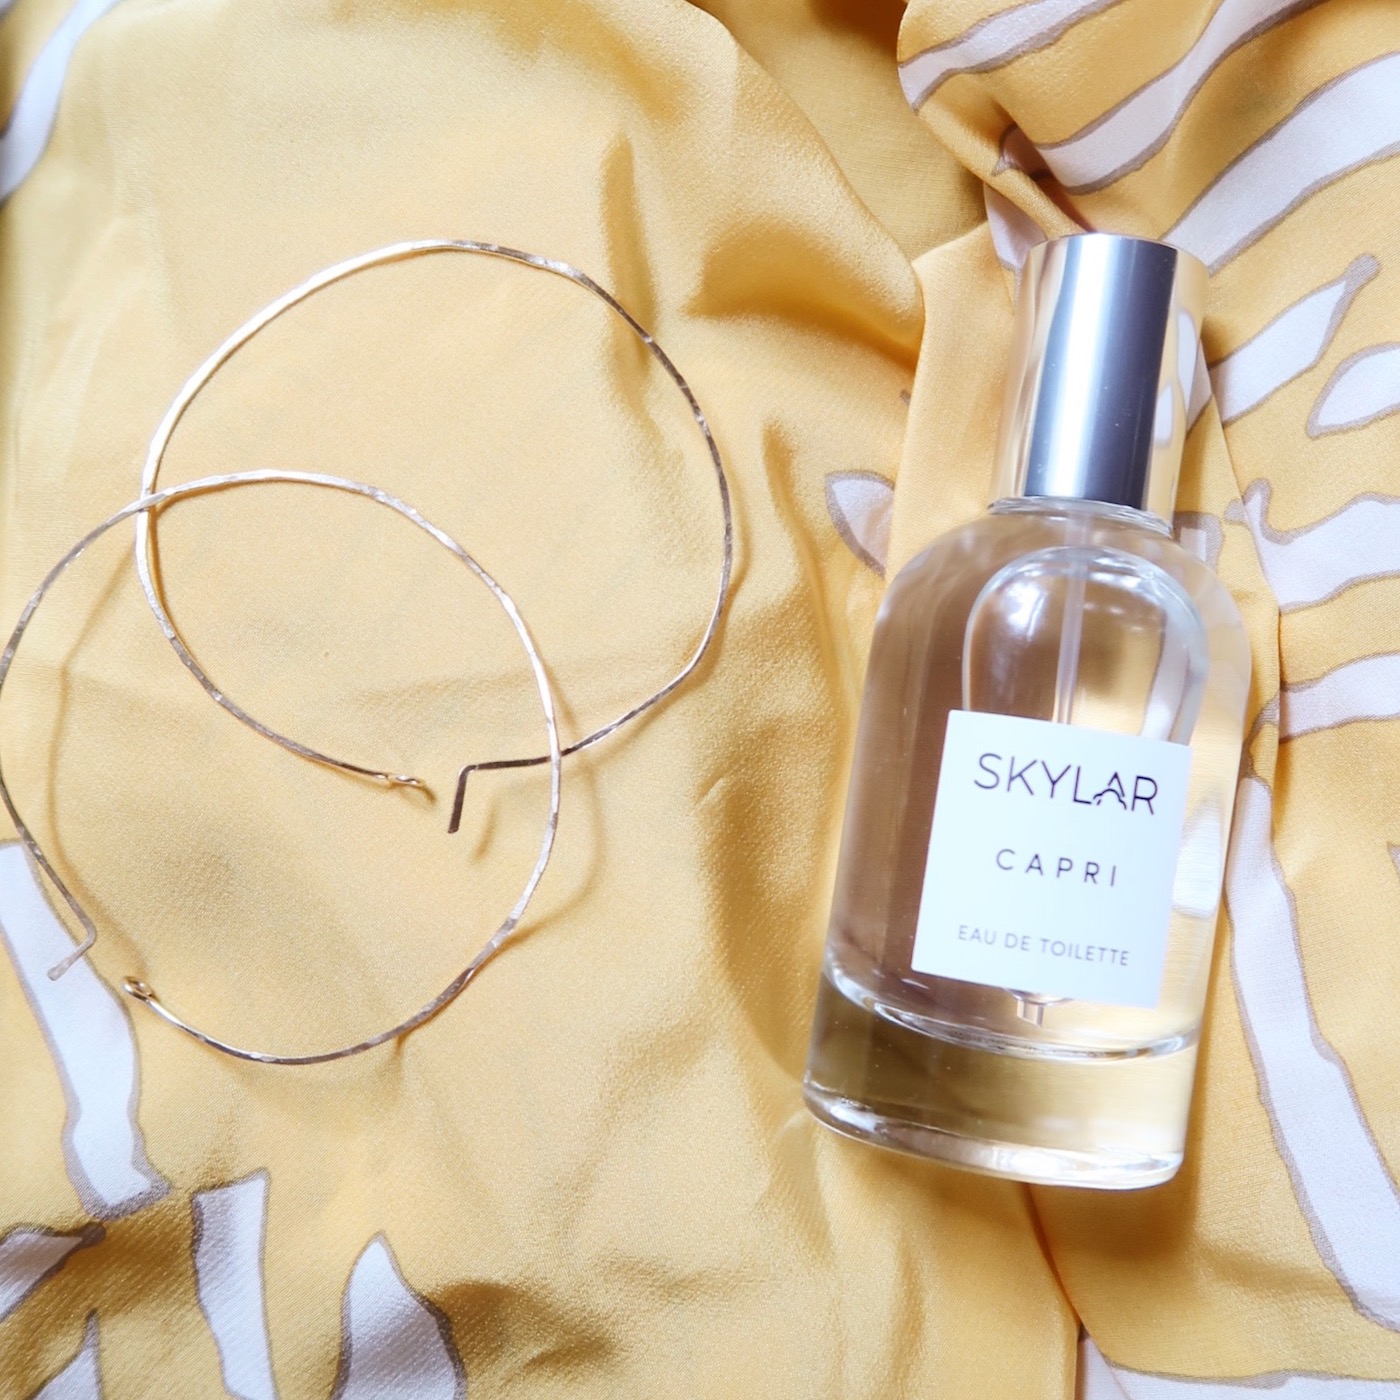 Skylar // a beautiful non-toxic perfume // www.thehiveblog.com